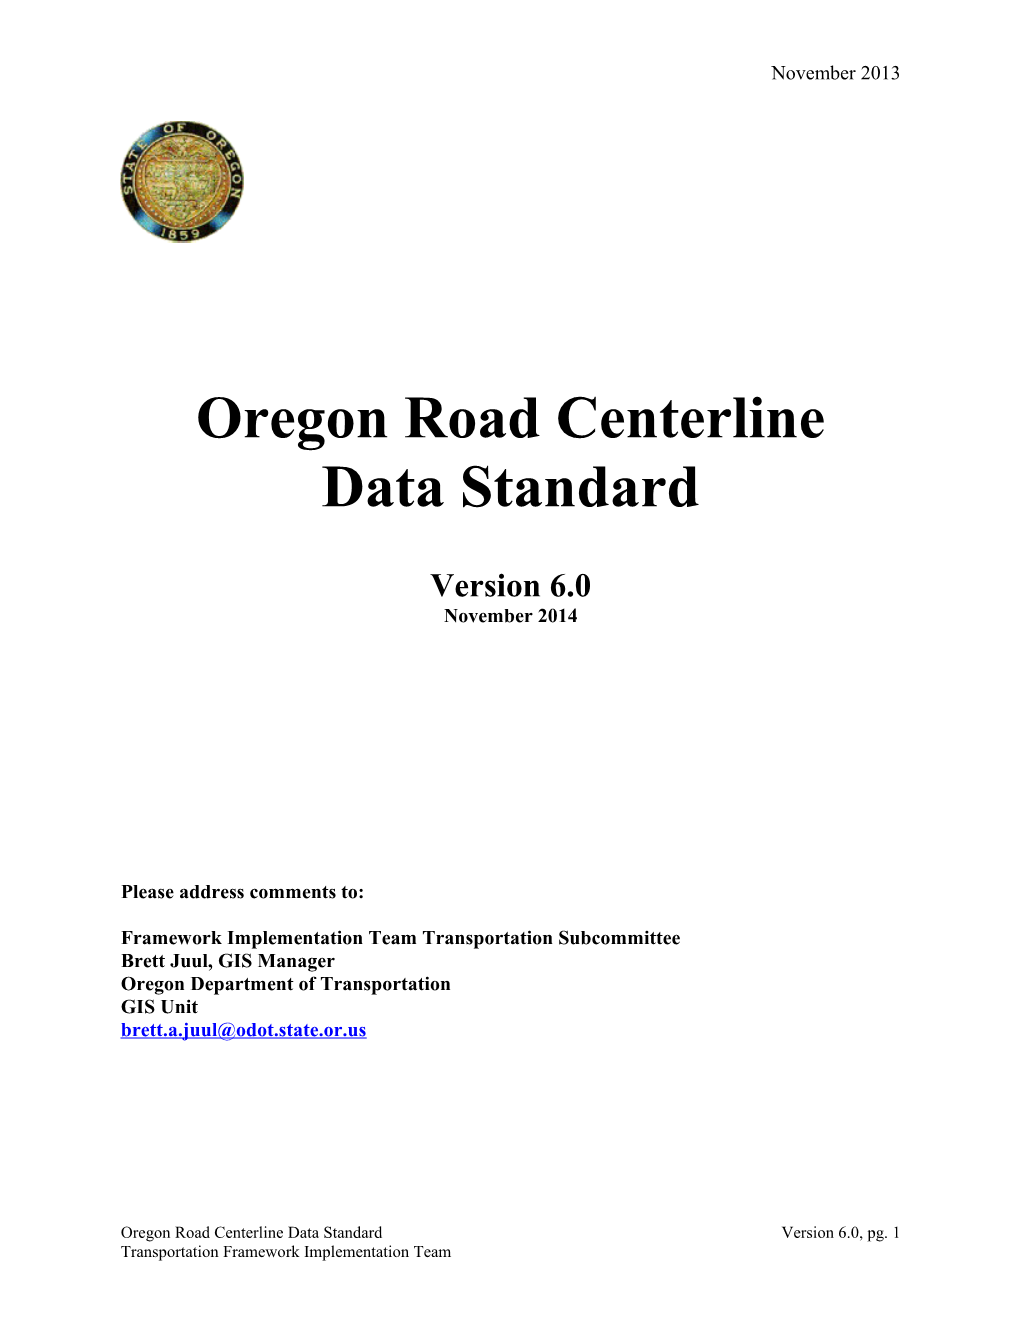 Oregon Road Centerline Data Standard 6.0 (Amendment)